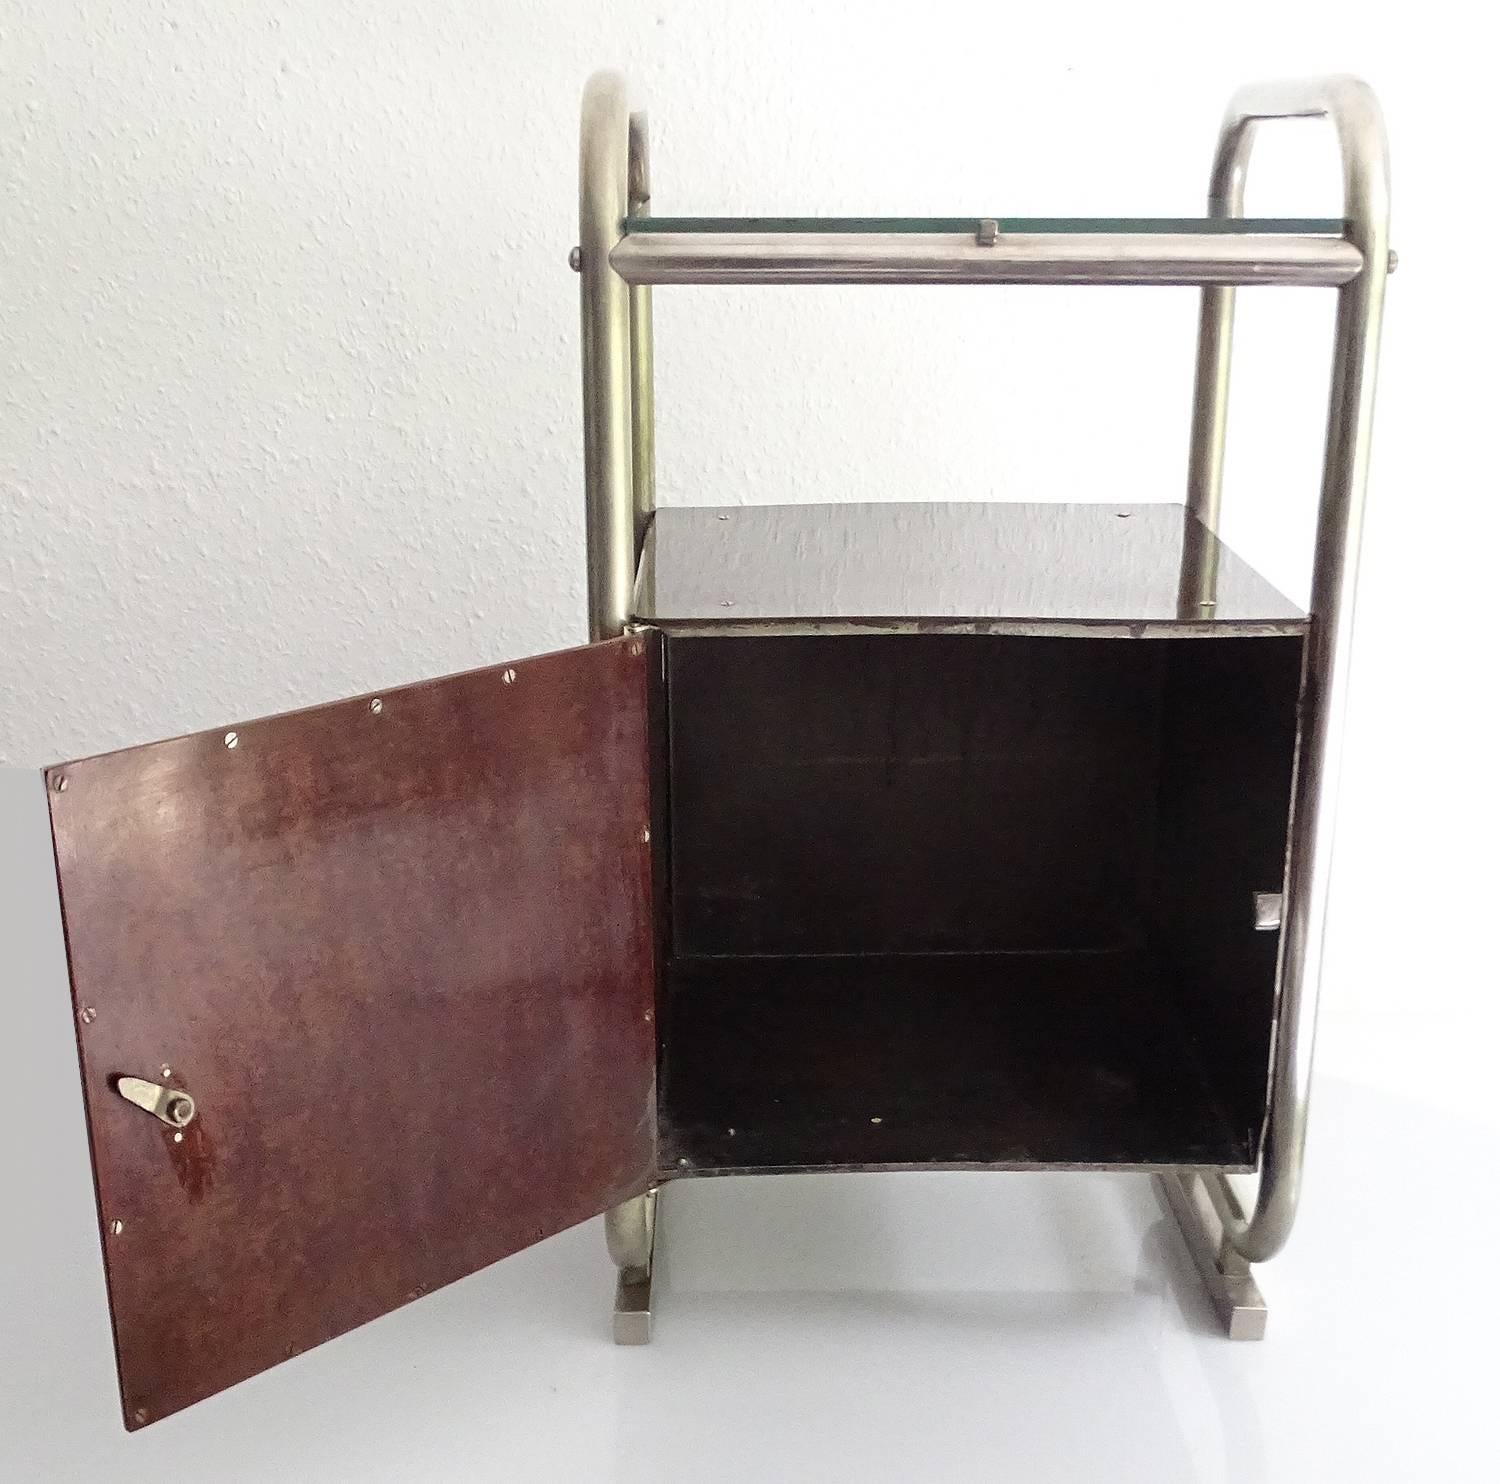 Bakelite Pair of Bauhaus Art Deco Industrial Side Tables Cabinets, 1930s Modernist Design